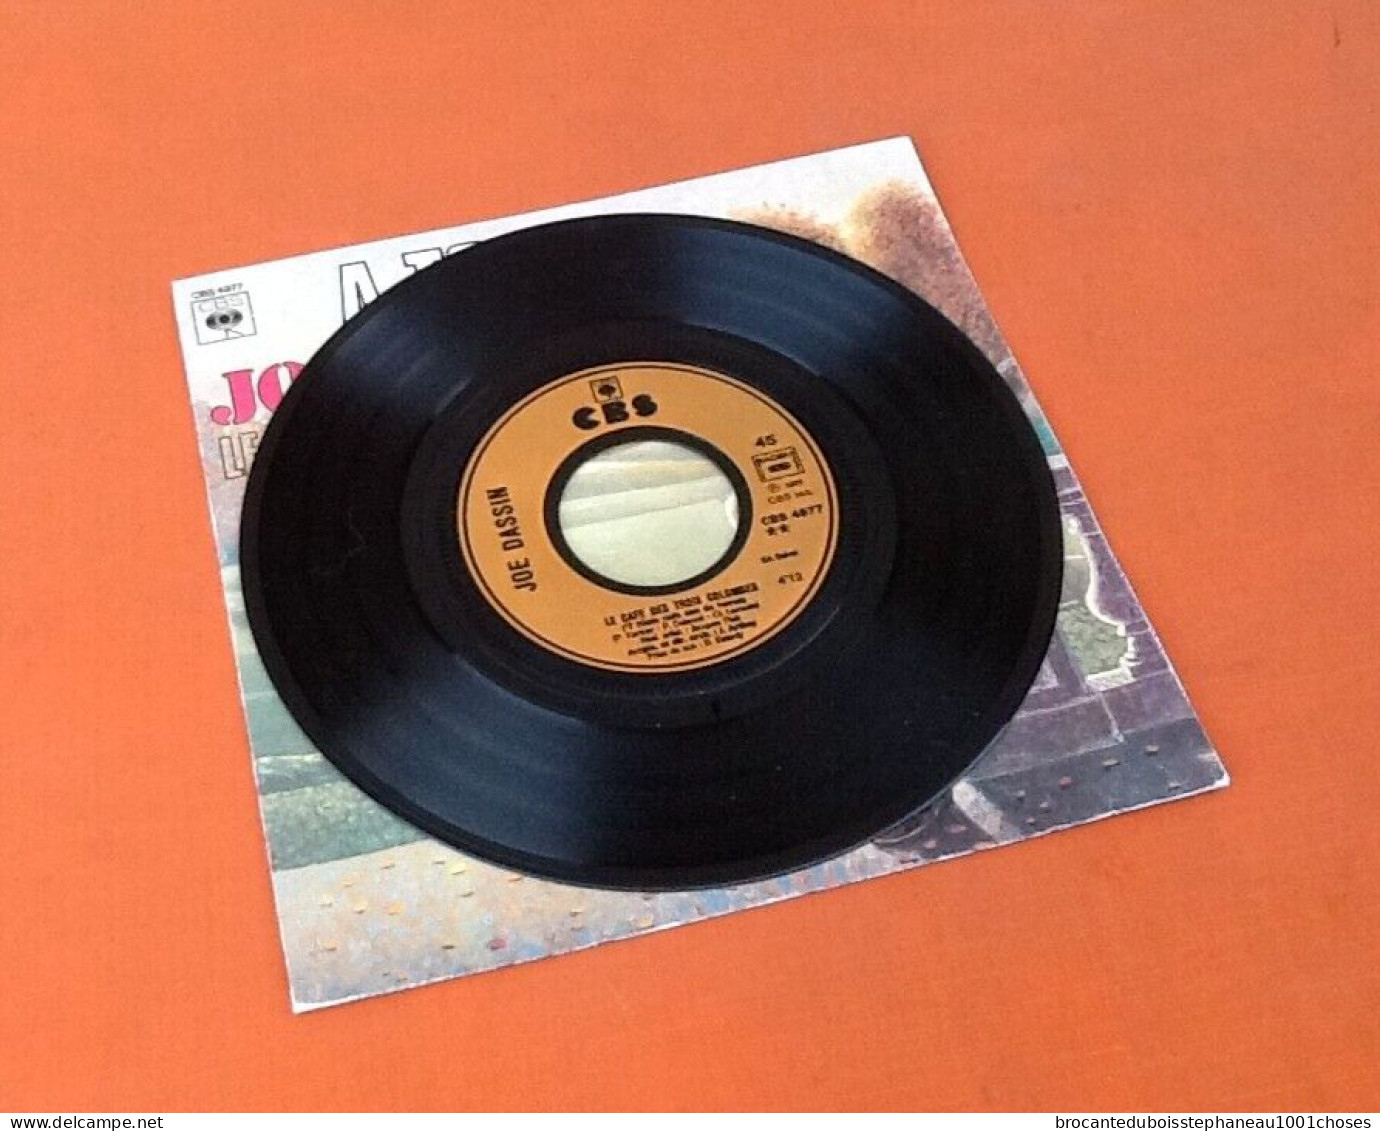 Vinyle 45 Tours  Joe Dassin  A Toi  (1977)  CBS 4977 - Disco & Pop